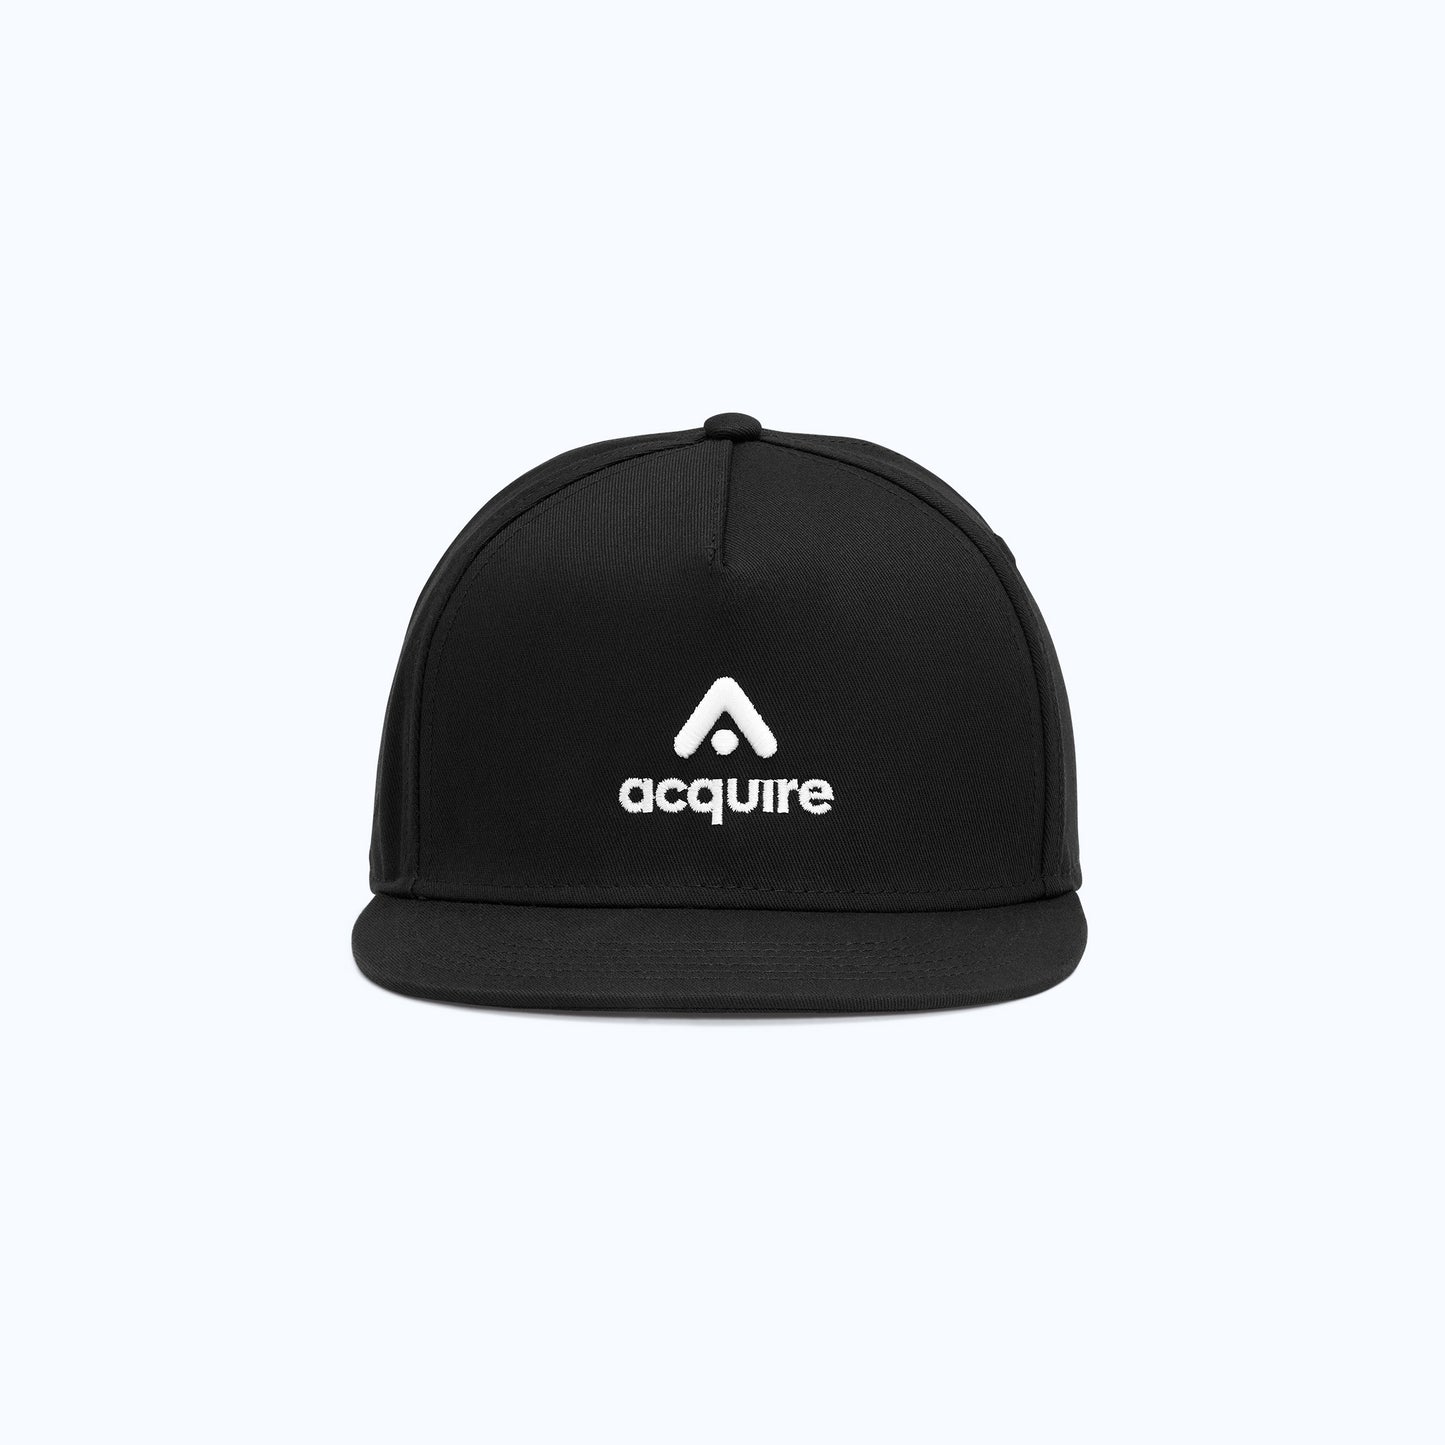 Acquire.com Snapback Hat